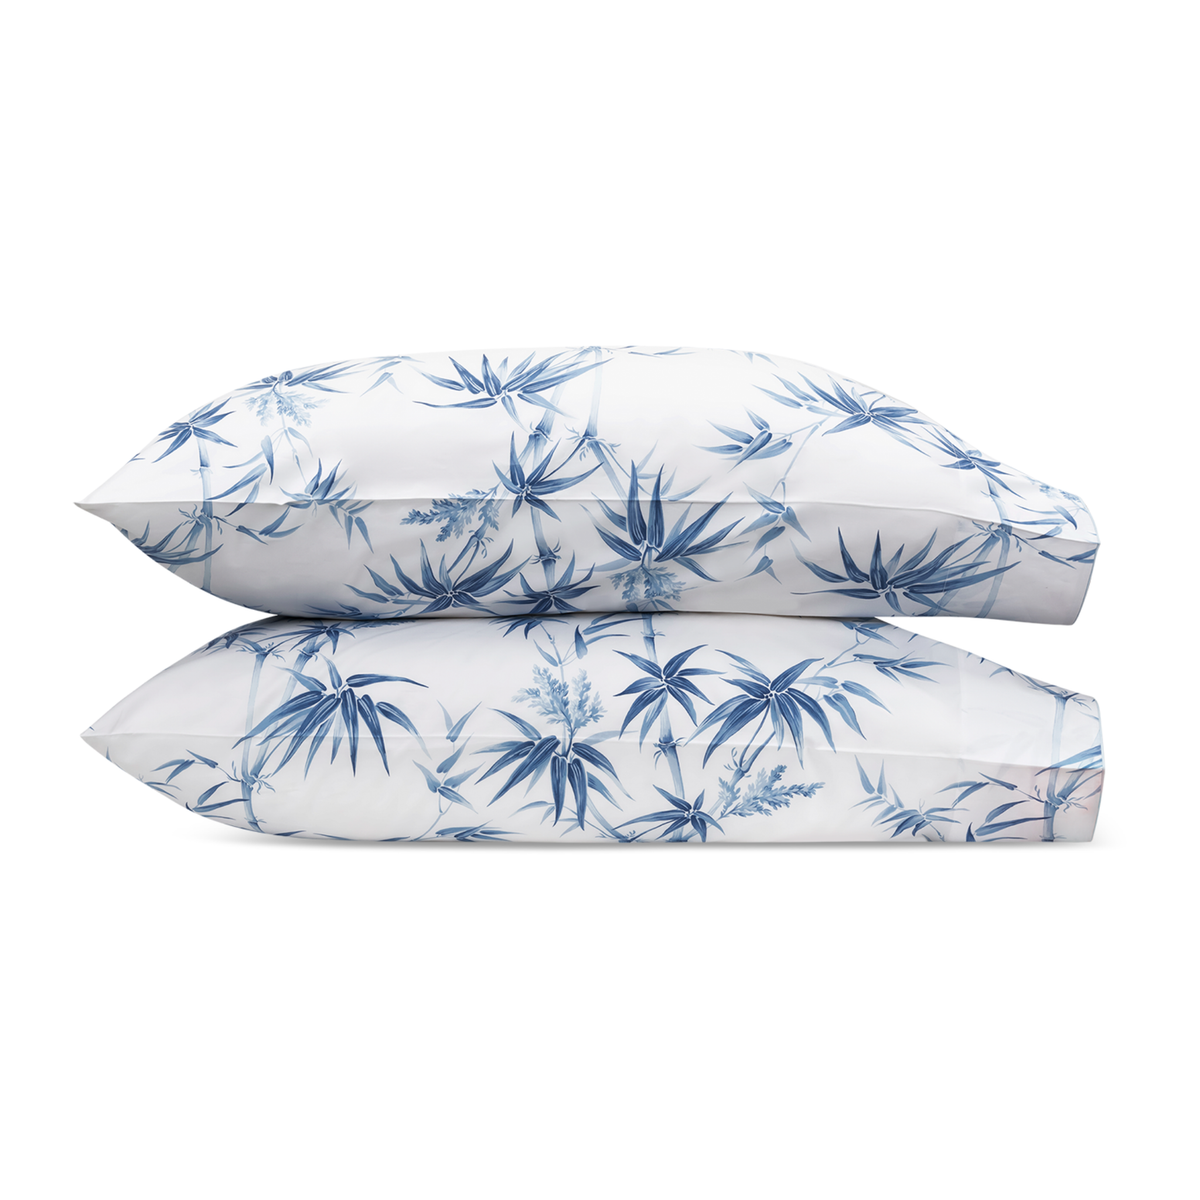 Pair of Pillowcases of Matouk Schumacher Dominique Bedding in Azure Color